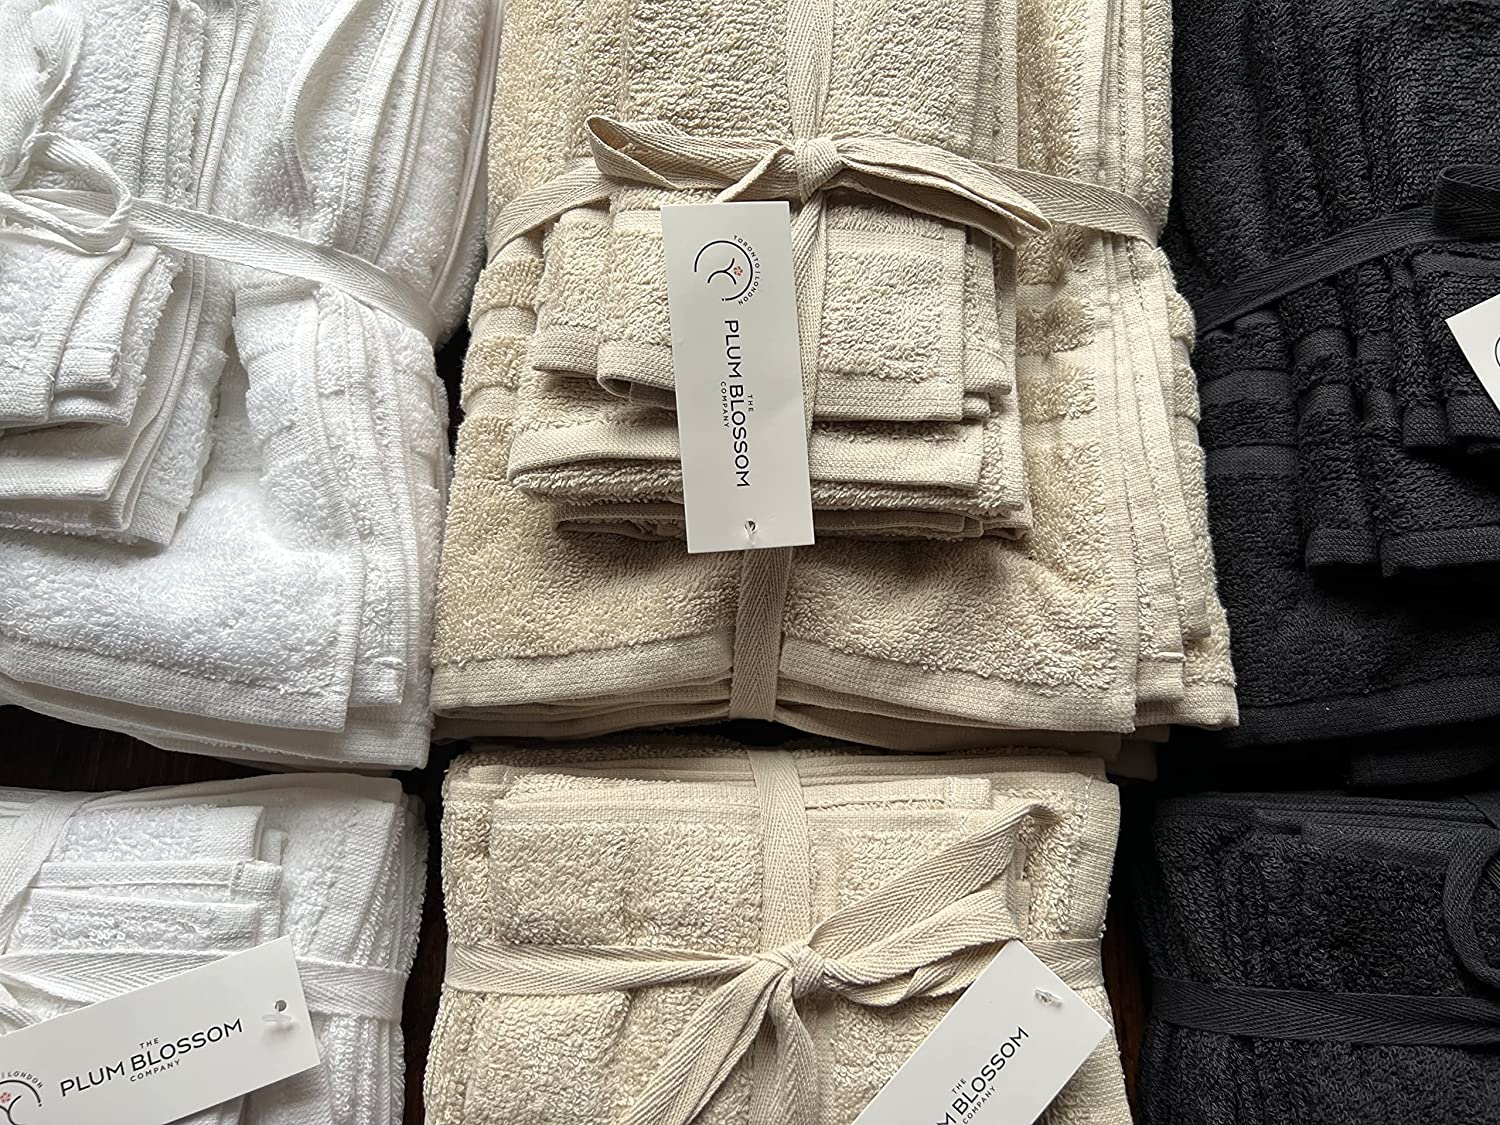 charisma luxury bath towel 100 hygro cotton linen from